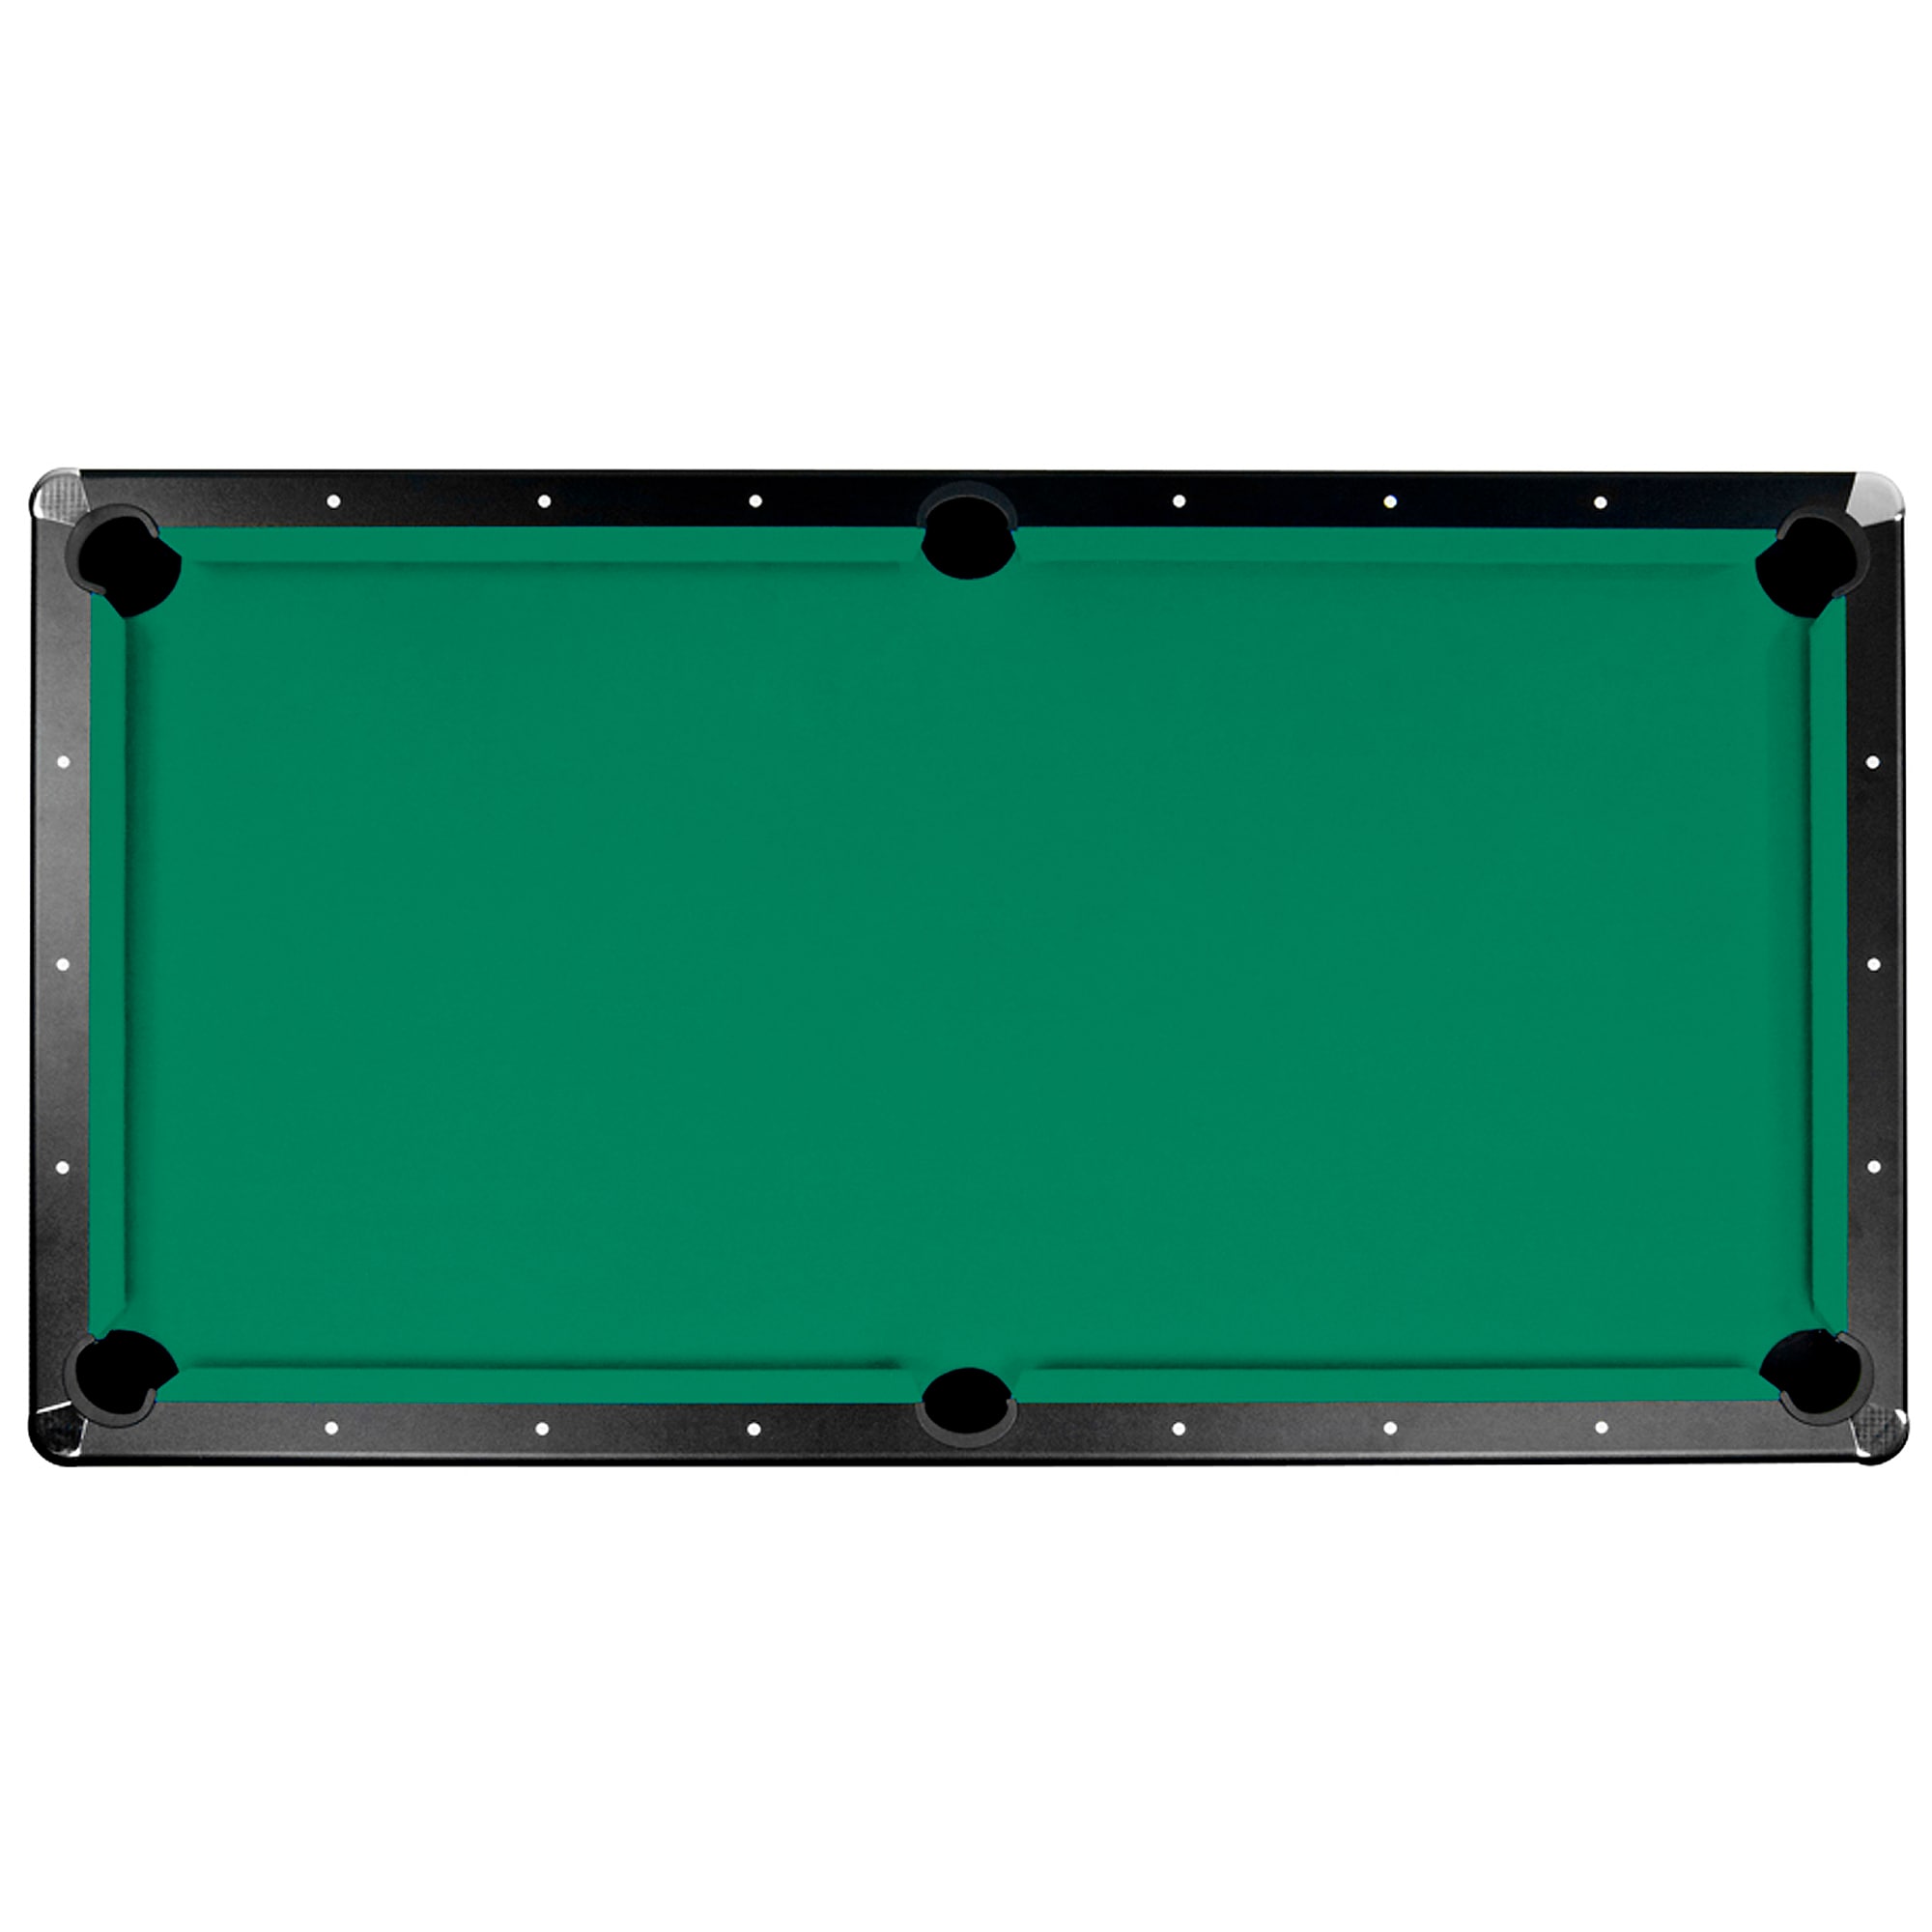 12 Premium Blue Cubes Pool Cue Stick Chalk Snooker Billiard Sports Accessories for sale online 